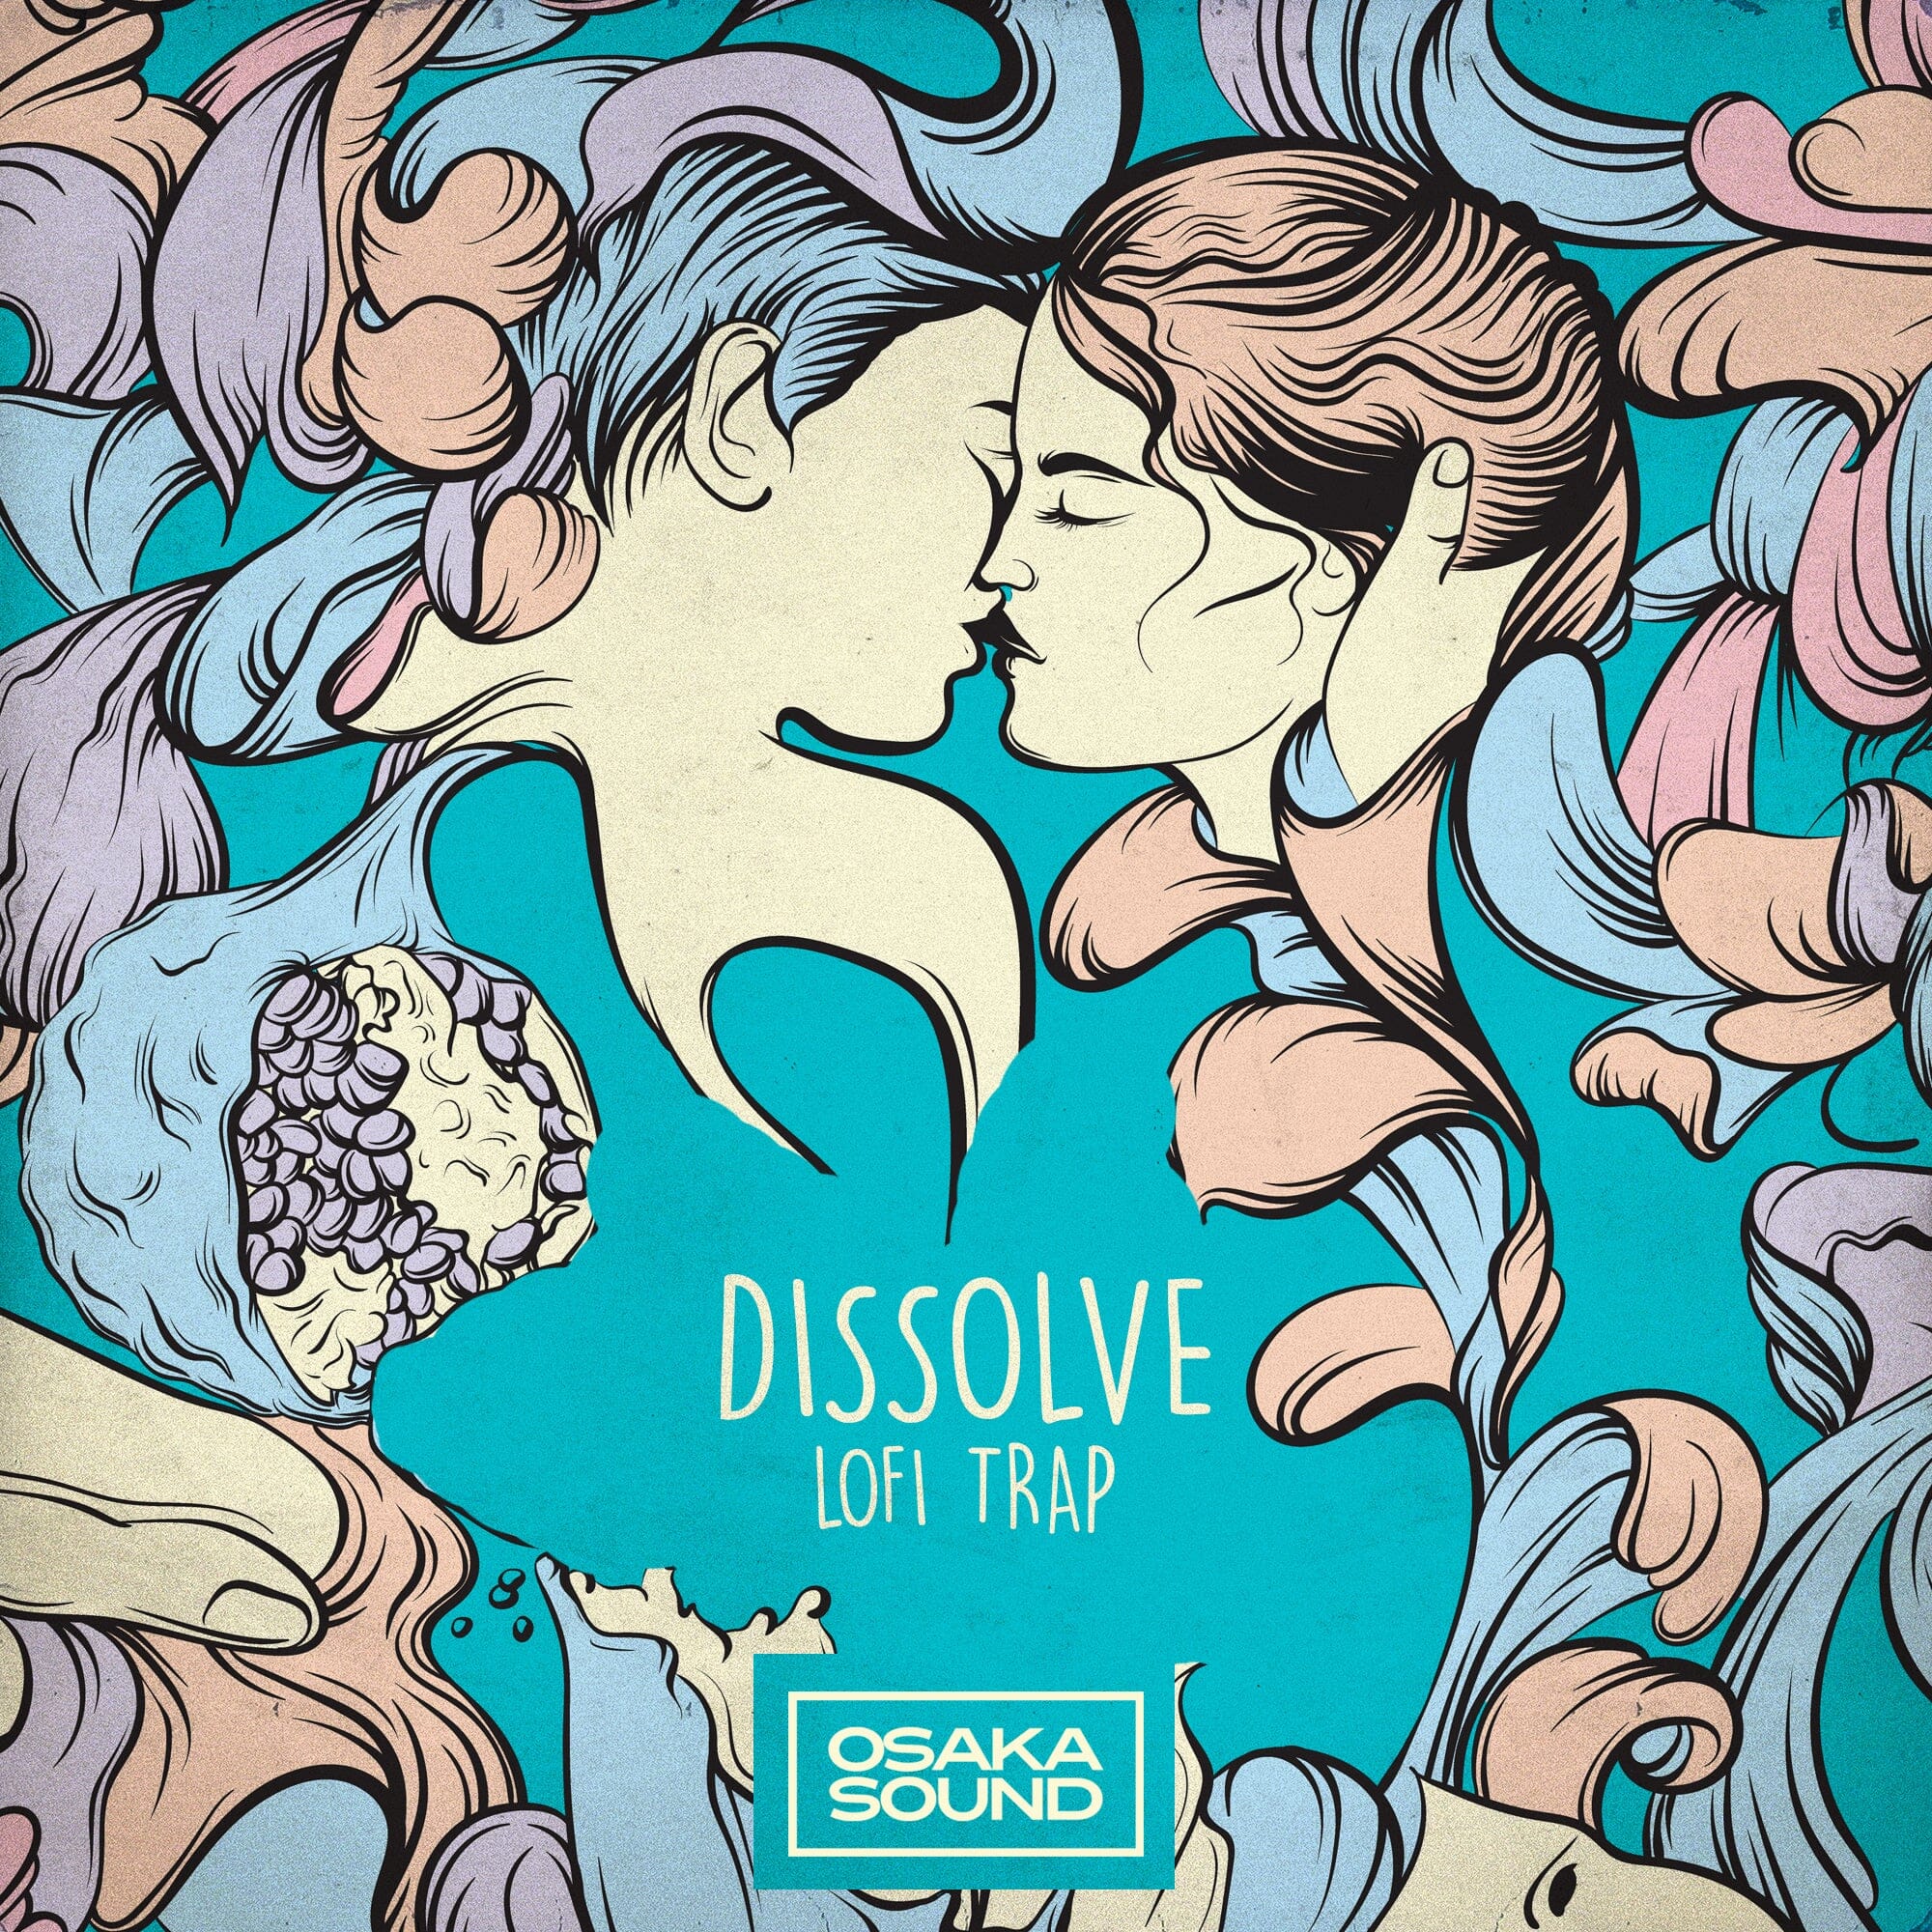 Dissolve - Lofi Trap (Loops 808 Drums) Sample Pack Osaka Sound